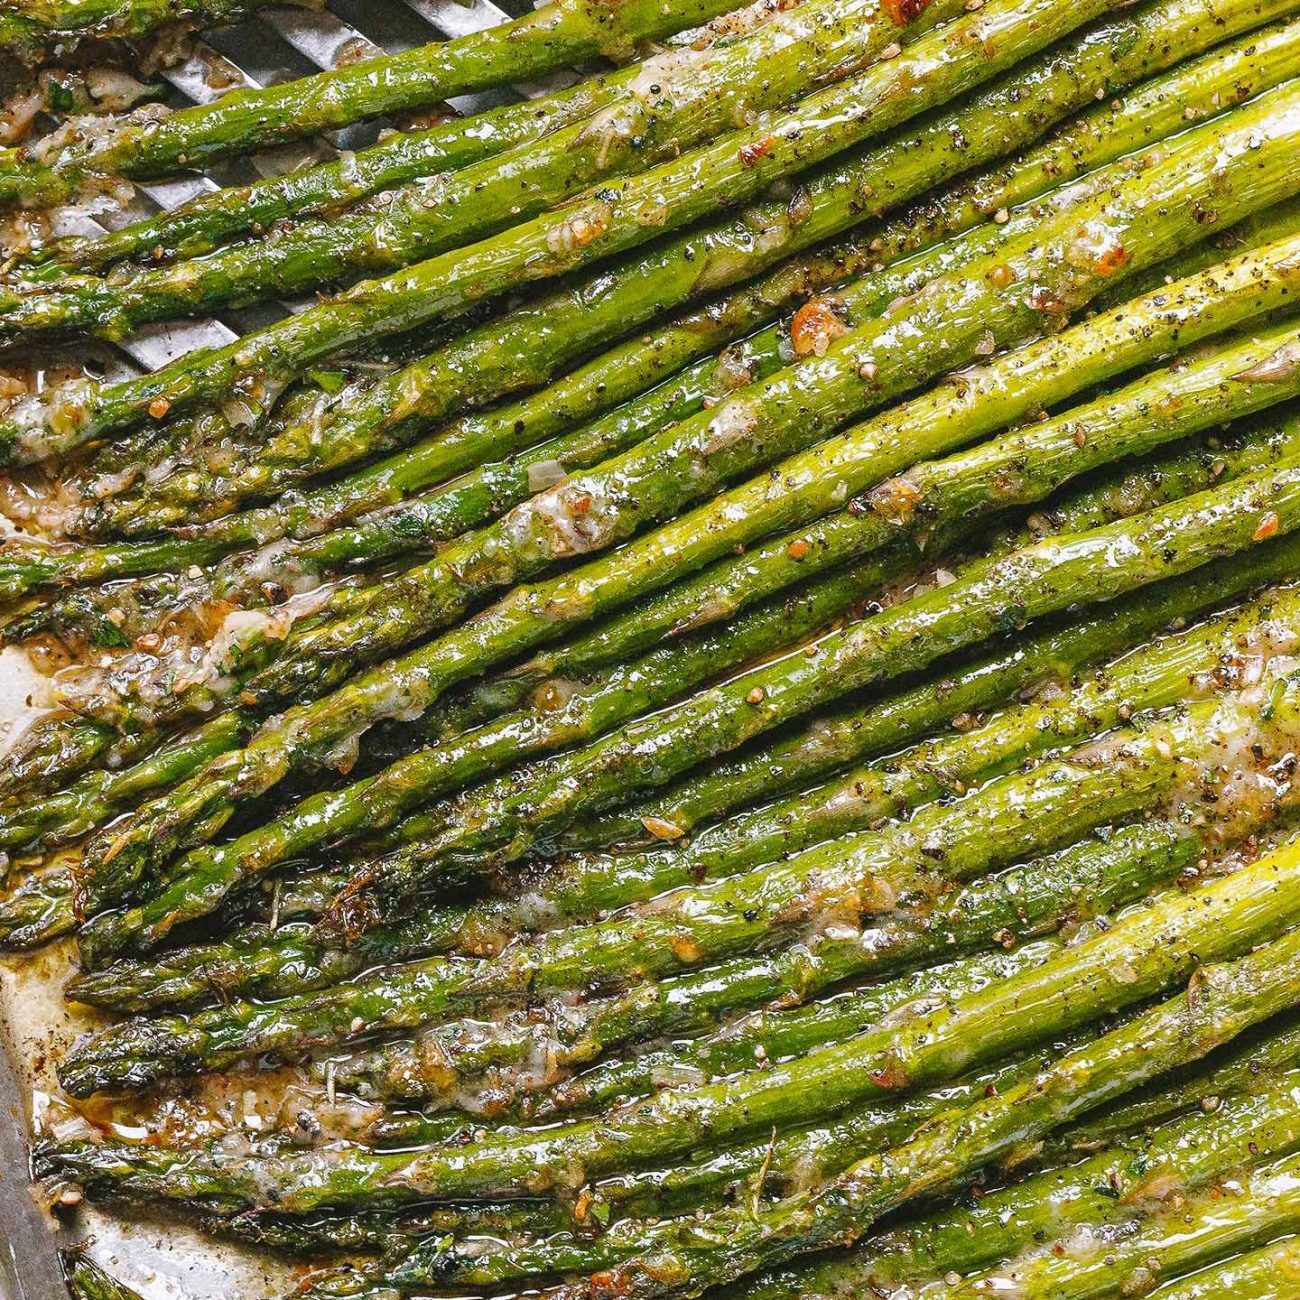 Favorite Baked Asparagus